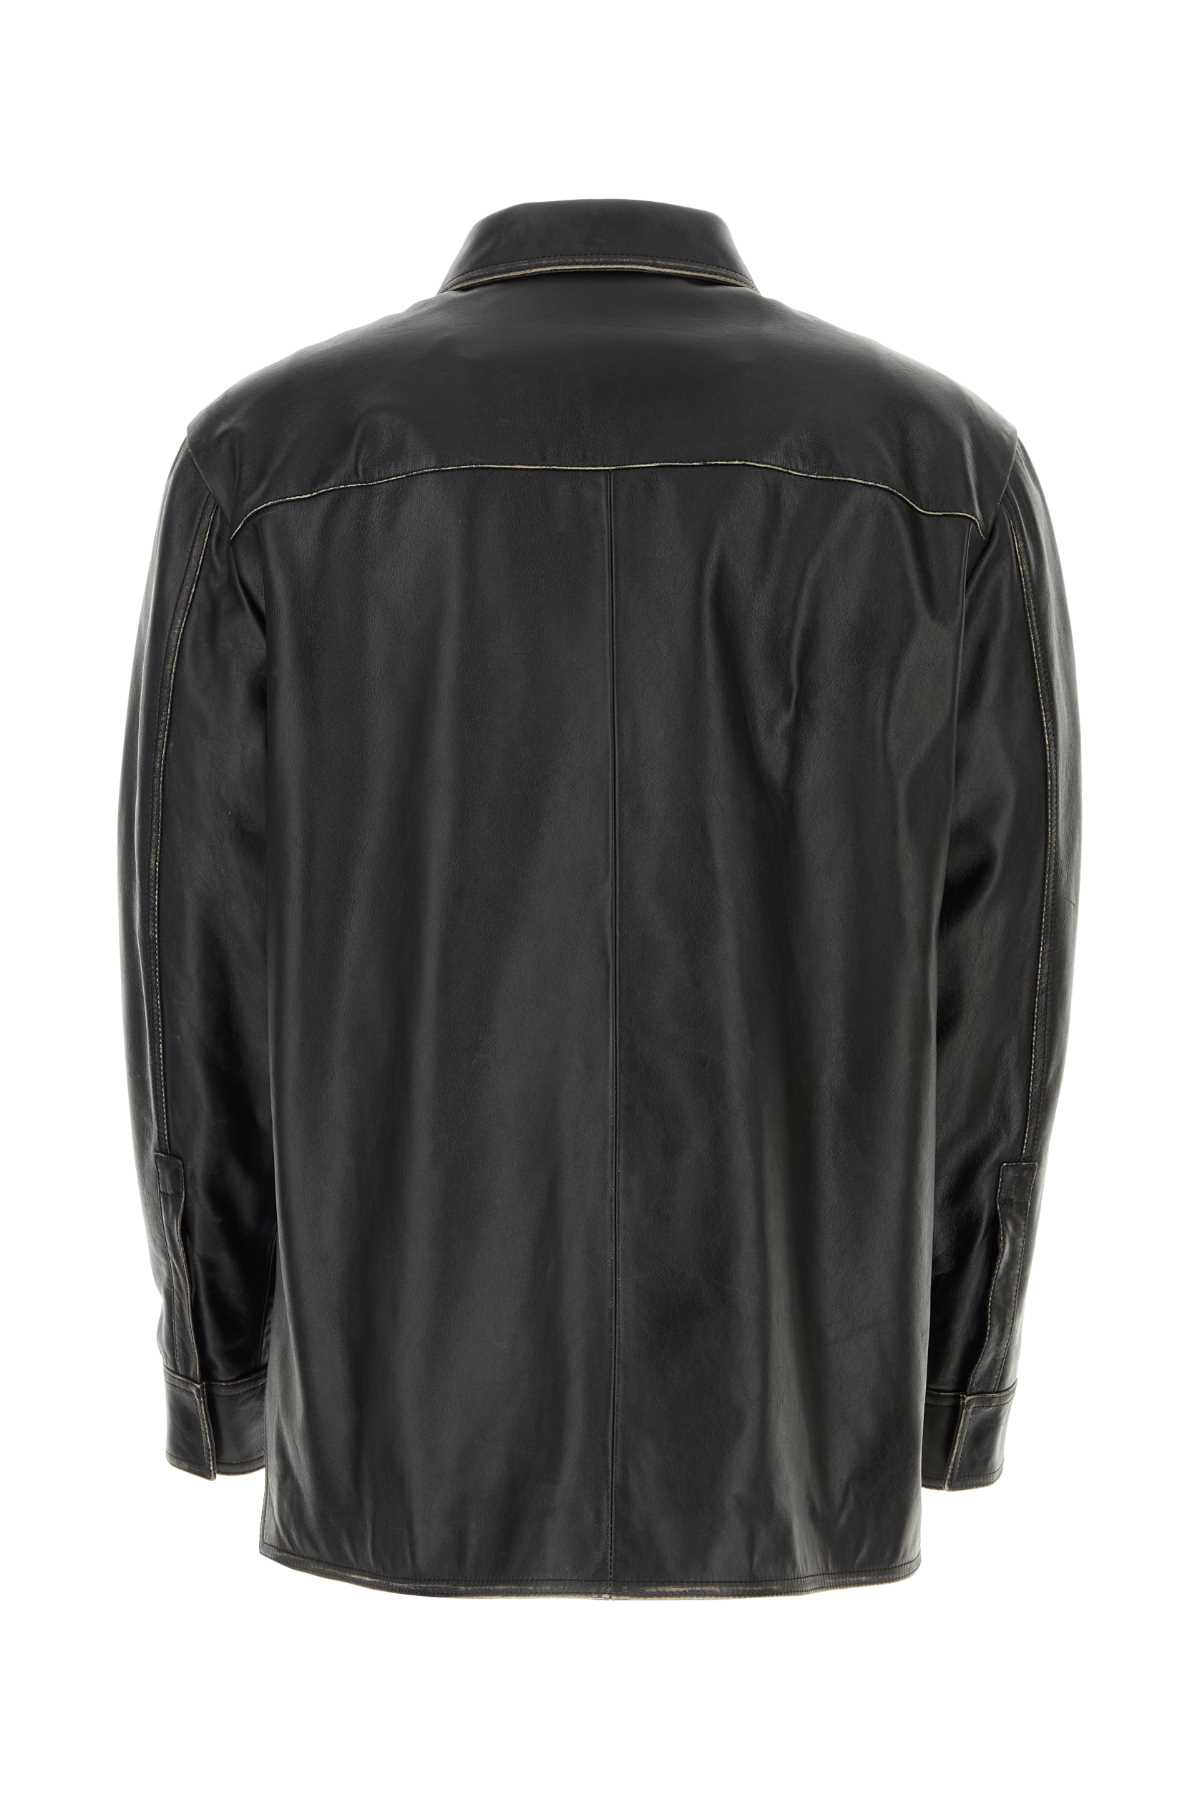 Loewe Black Nappa Leather Shirt